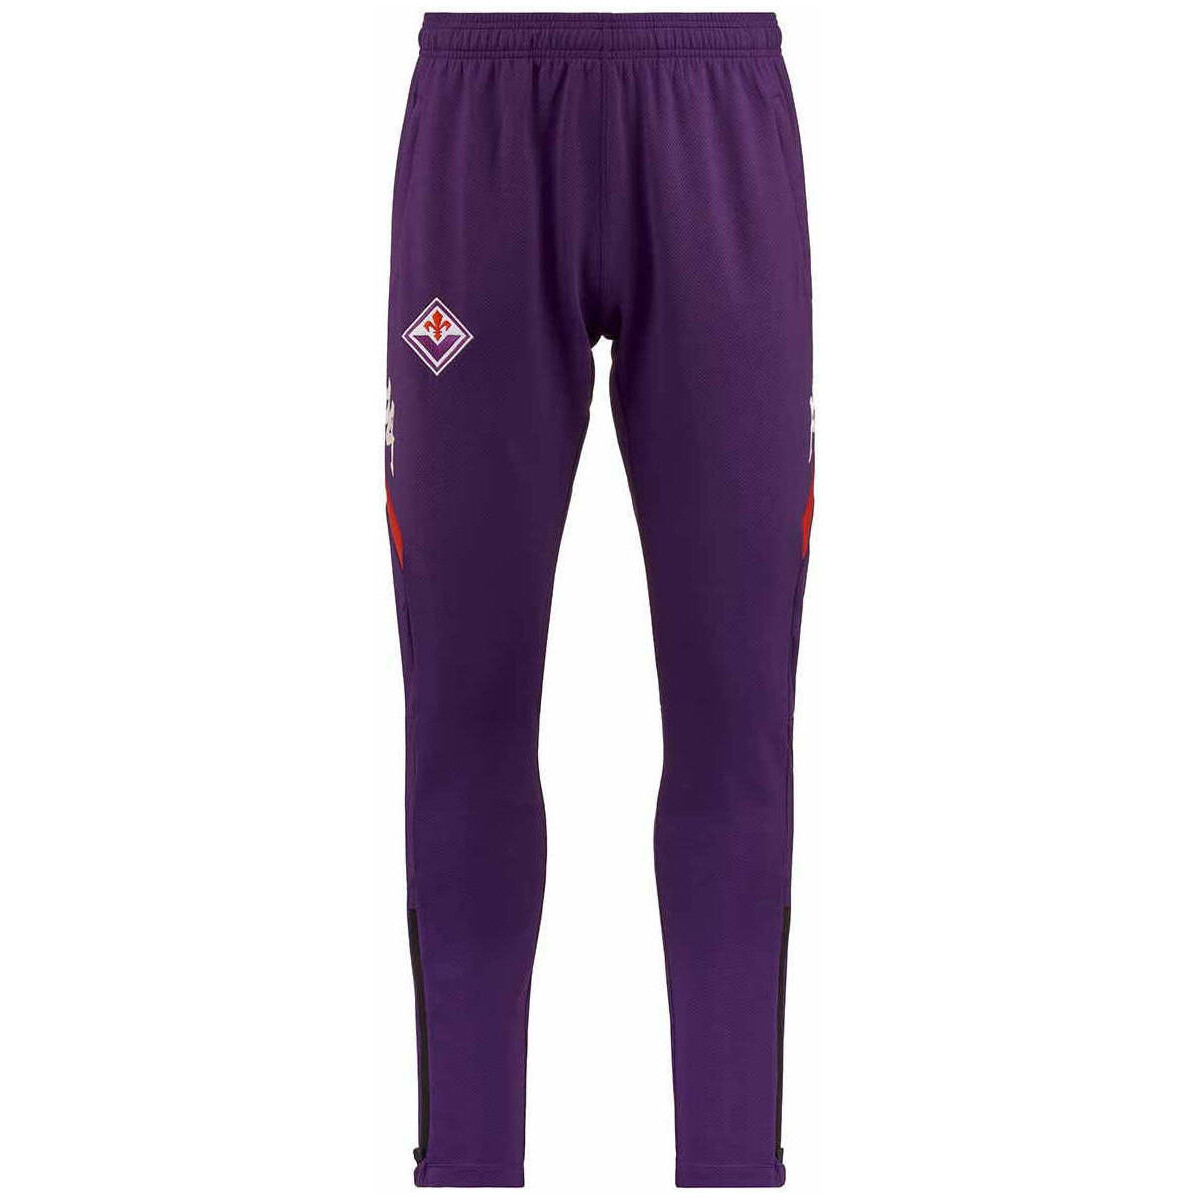 Kappa Violet Pantalon Abunszip Pro 6 ACF Fiorentina 22/